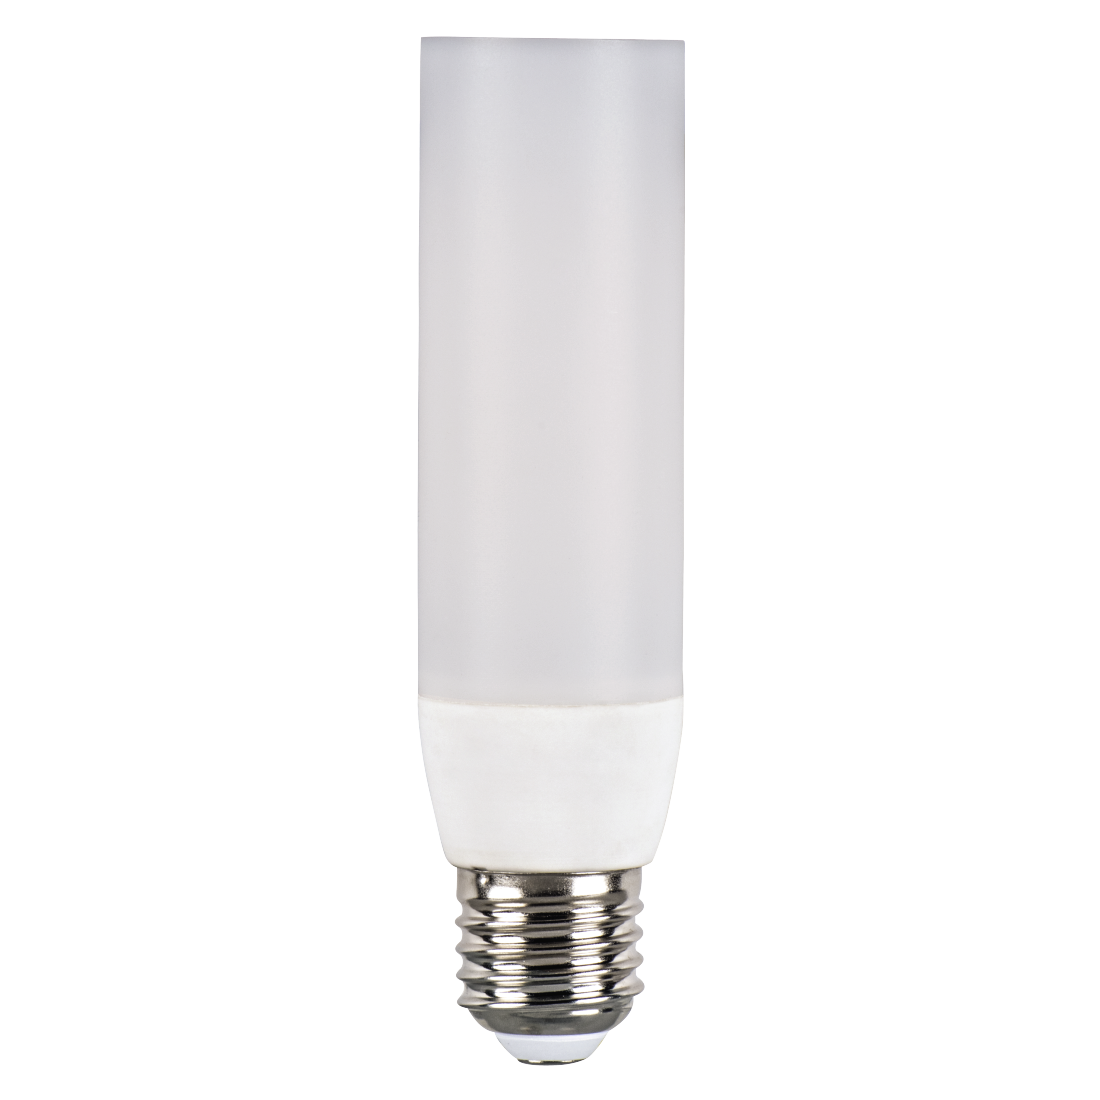 abx Druckfähige Abbildung - Xavax, LED-Lampe, E27, 470lm ersetzt 40W Röhrenlampe T37, Warmweiß